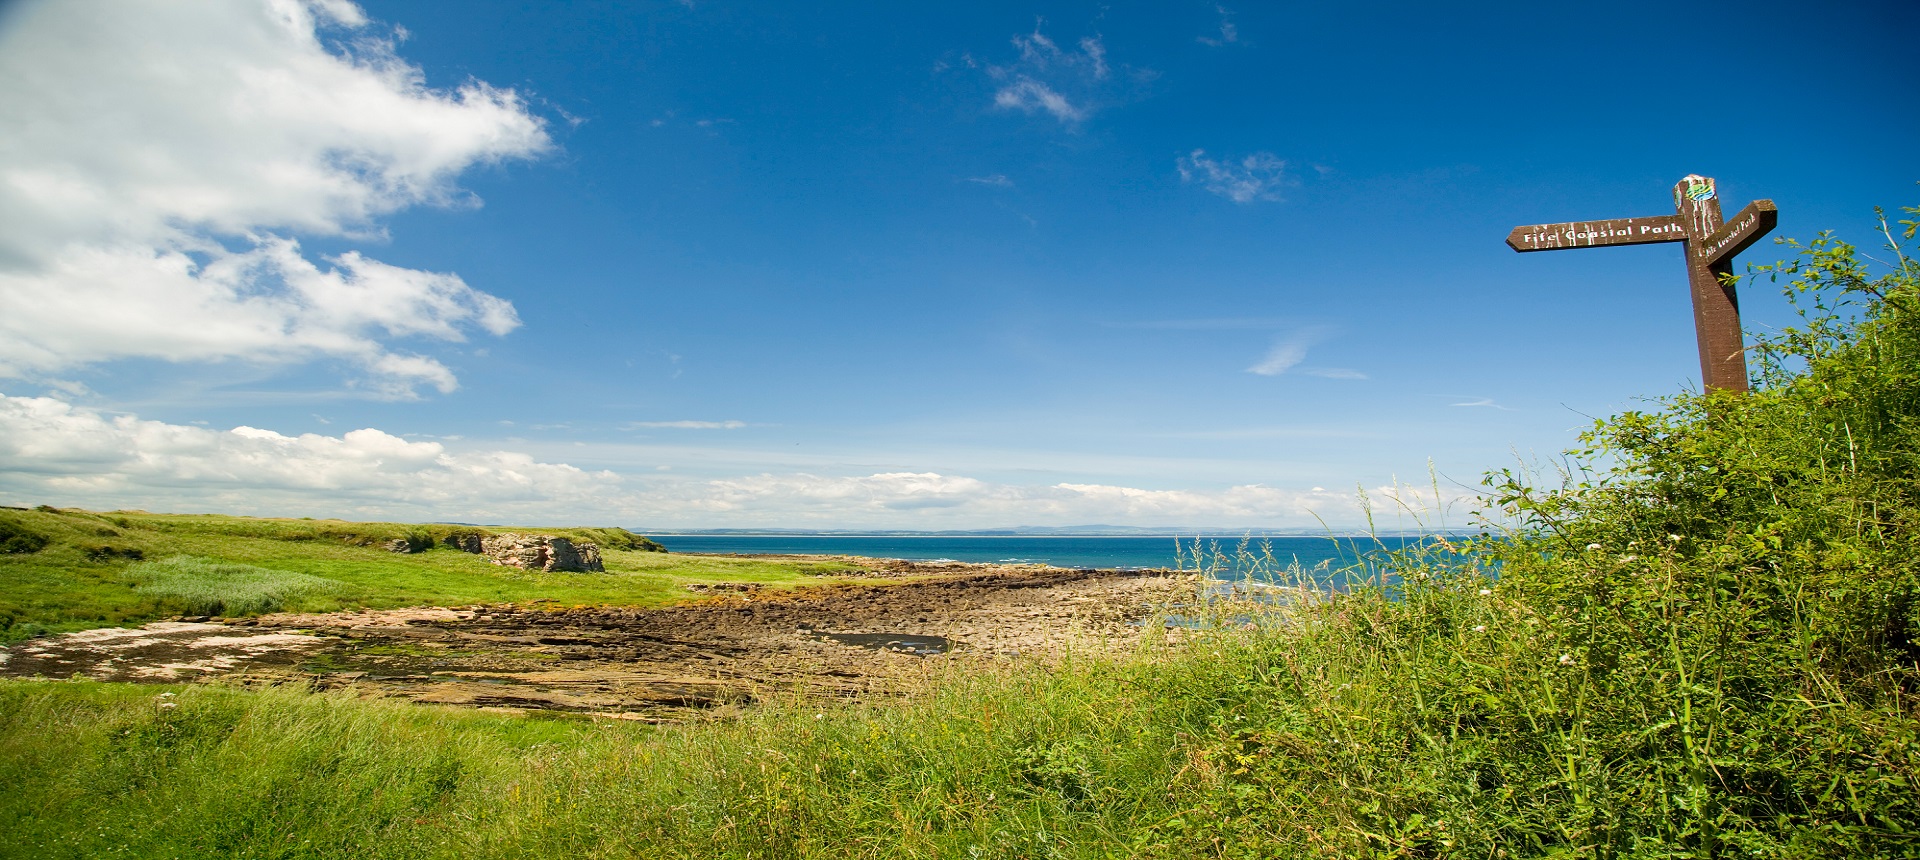 Fife Coastal Path - is it on your bucket list?